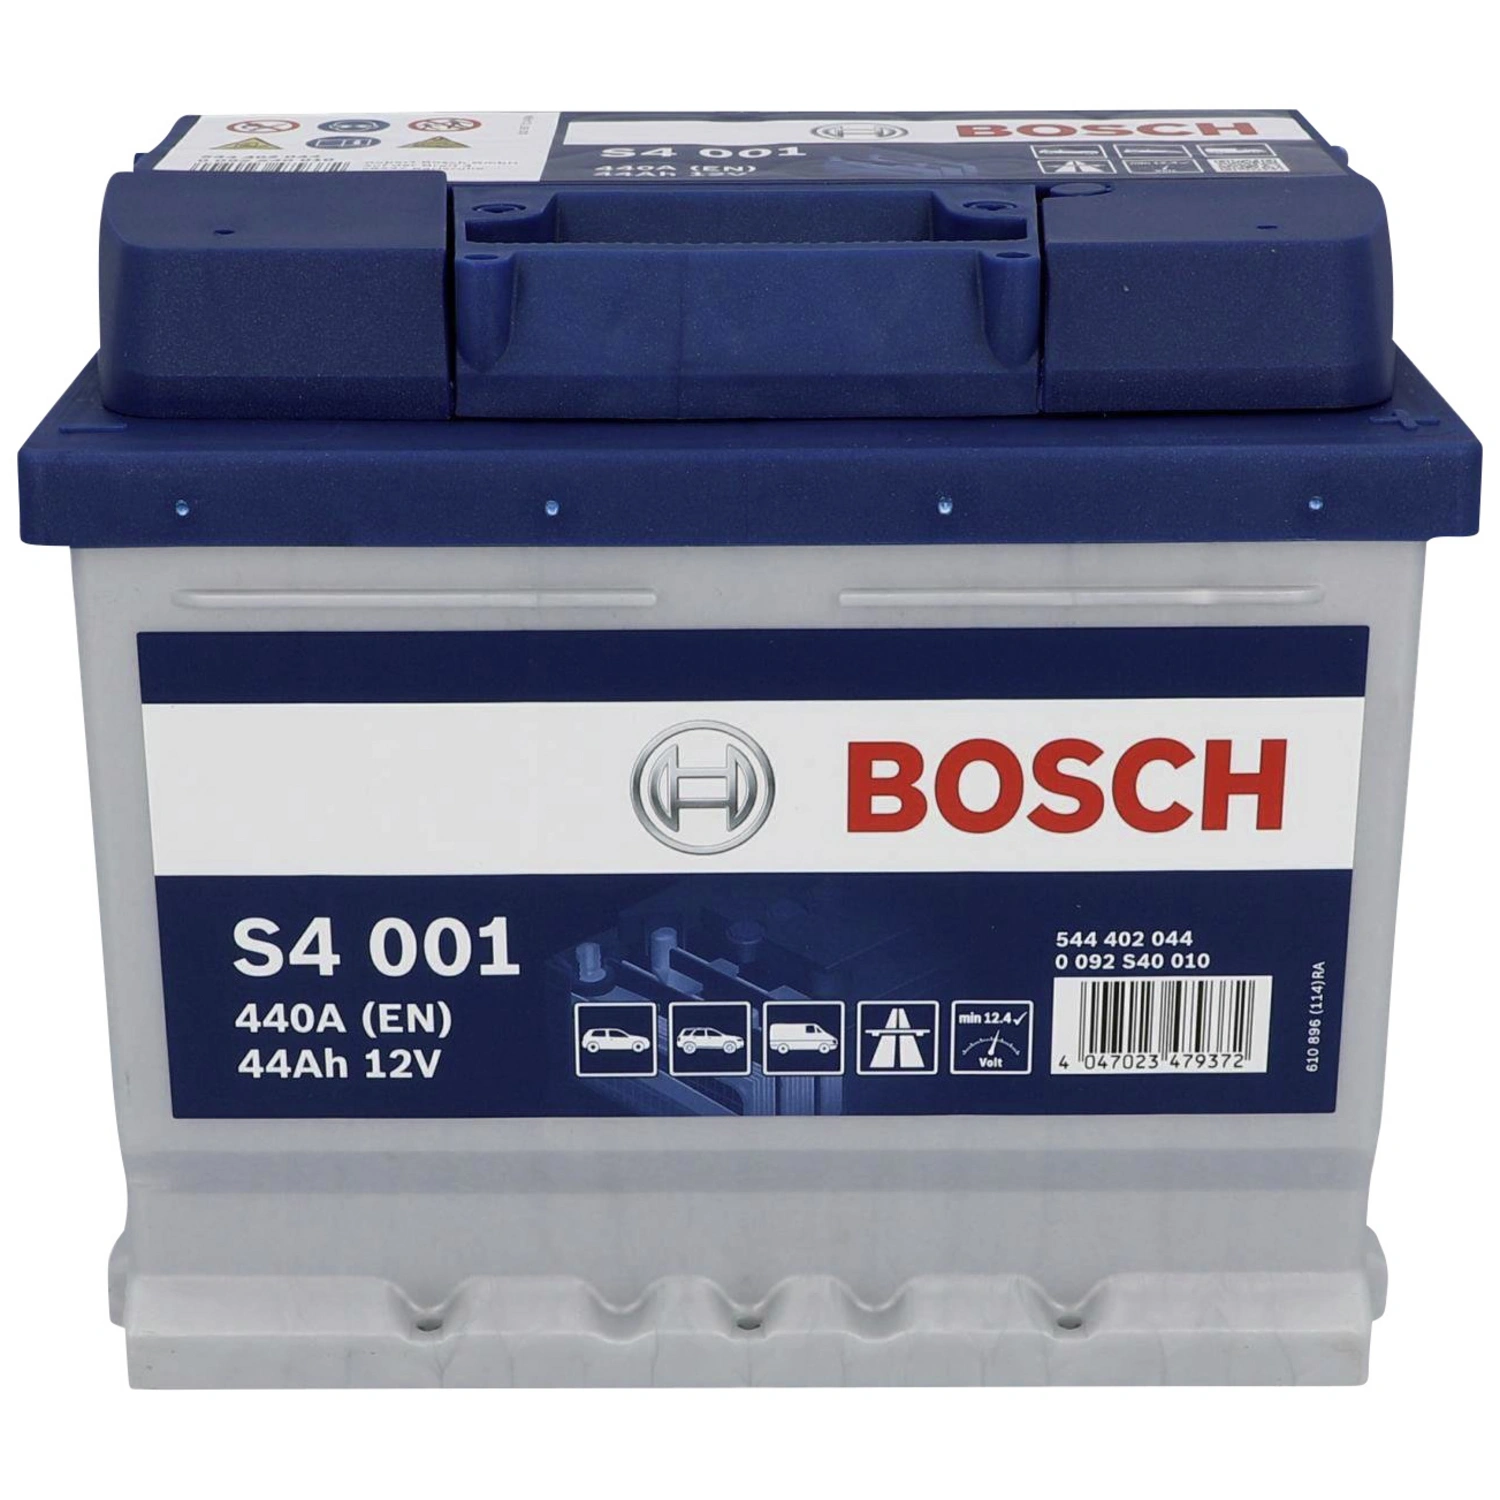 BOSCH Starterbatterie, BOSCH silver, 12V 44 Ah A440 S4 KSN S4 001 